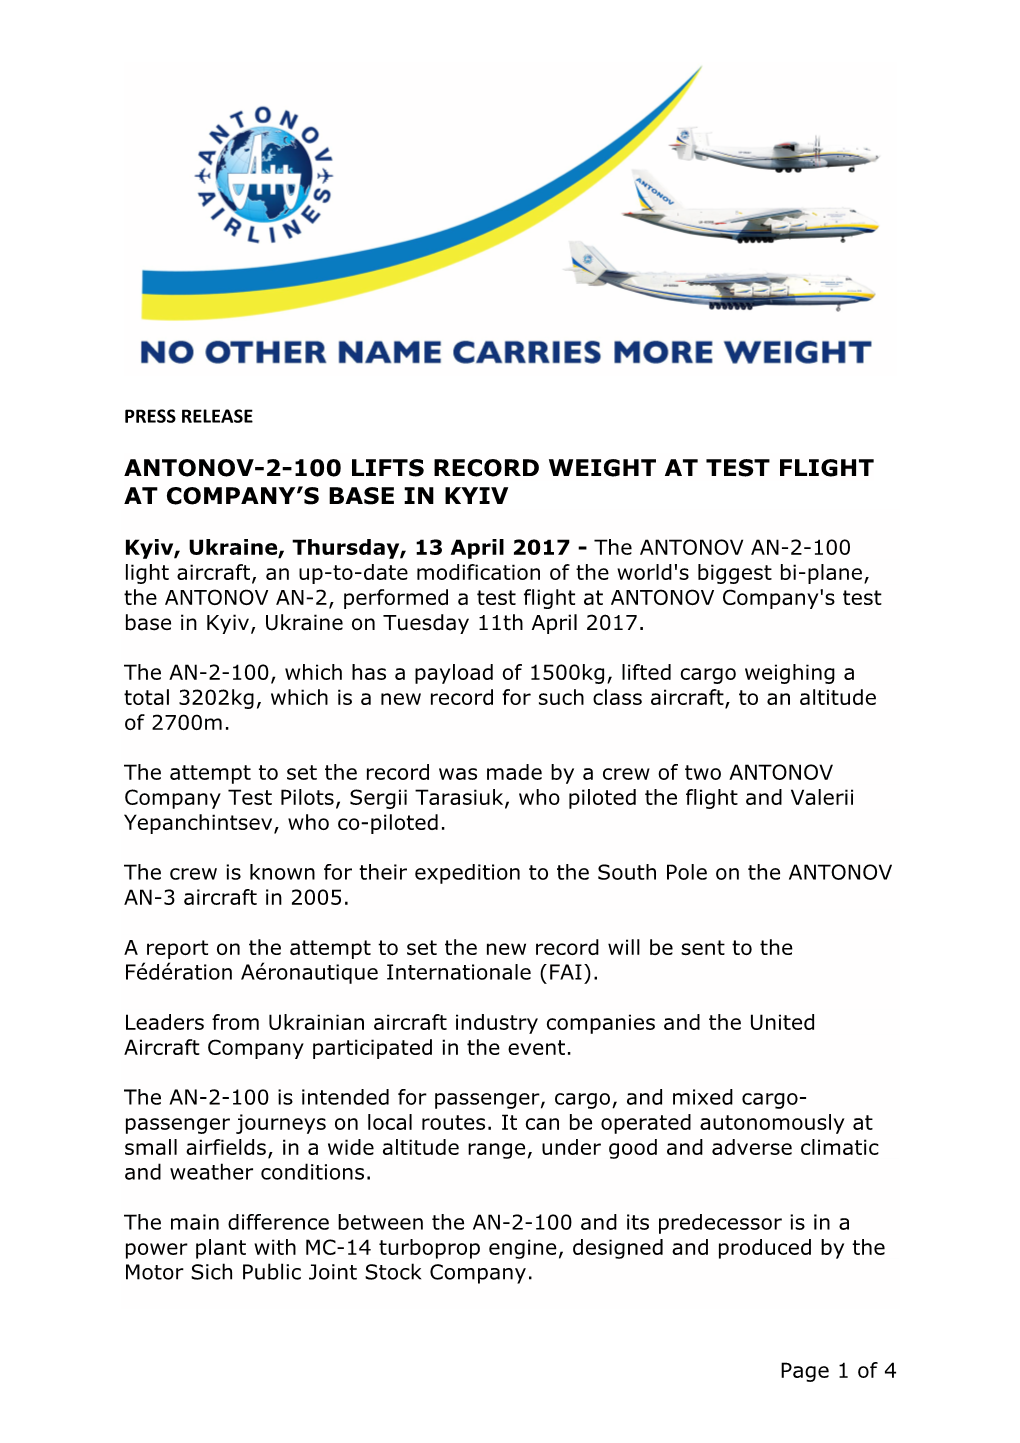 Antonov-2-100 Lifts Record Weight at Test Flight at Company’S Base in Kyiv